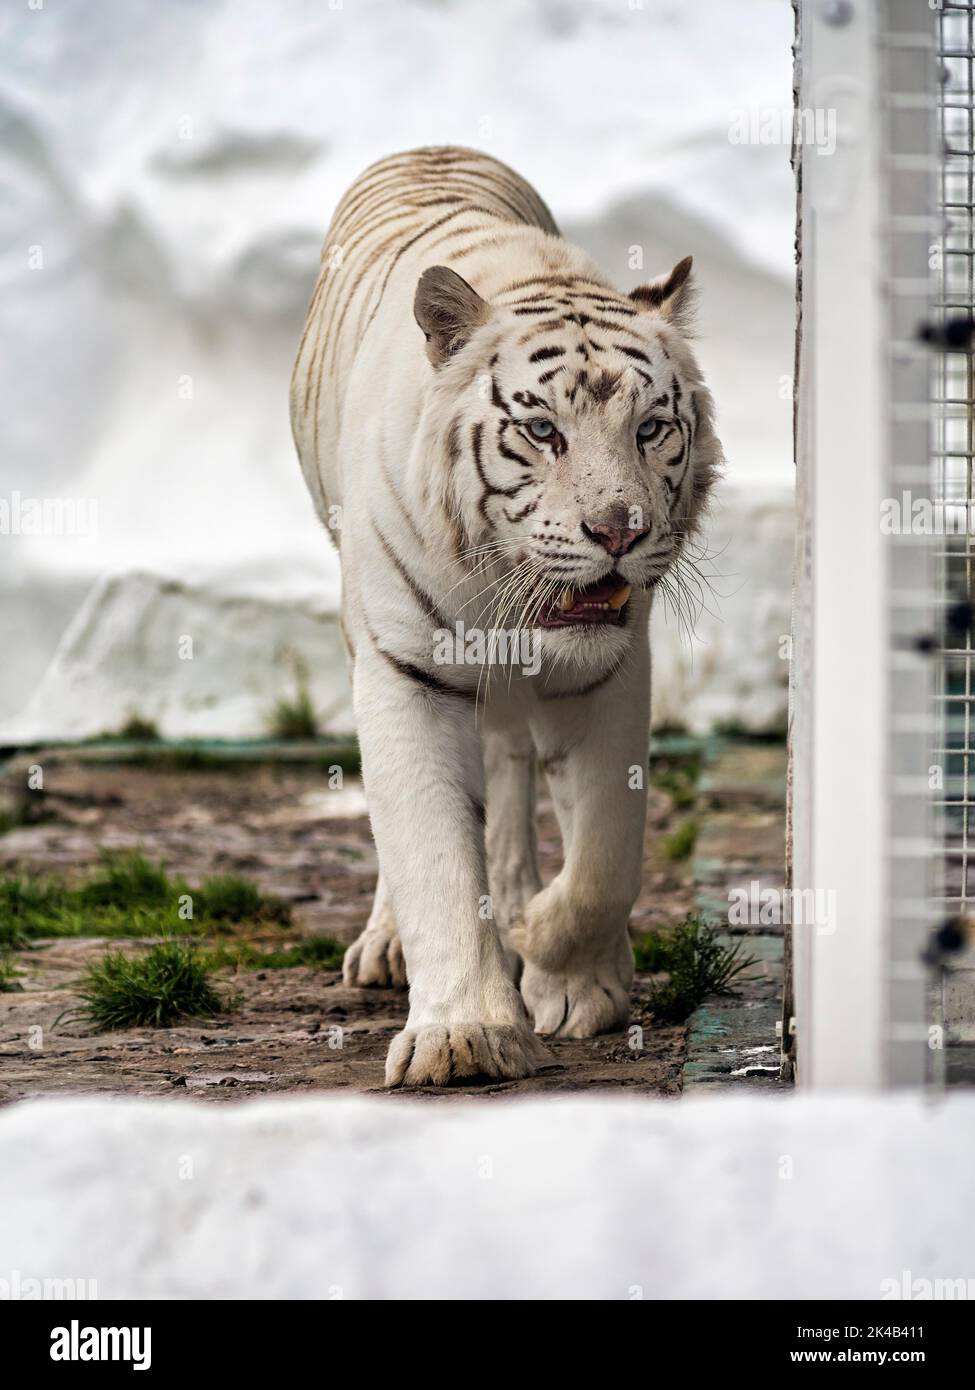 White tiger (Panthera tigris) next to its cage, leucism, restless, slightly open mouth, captive Stock Photo